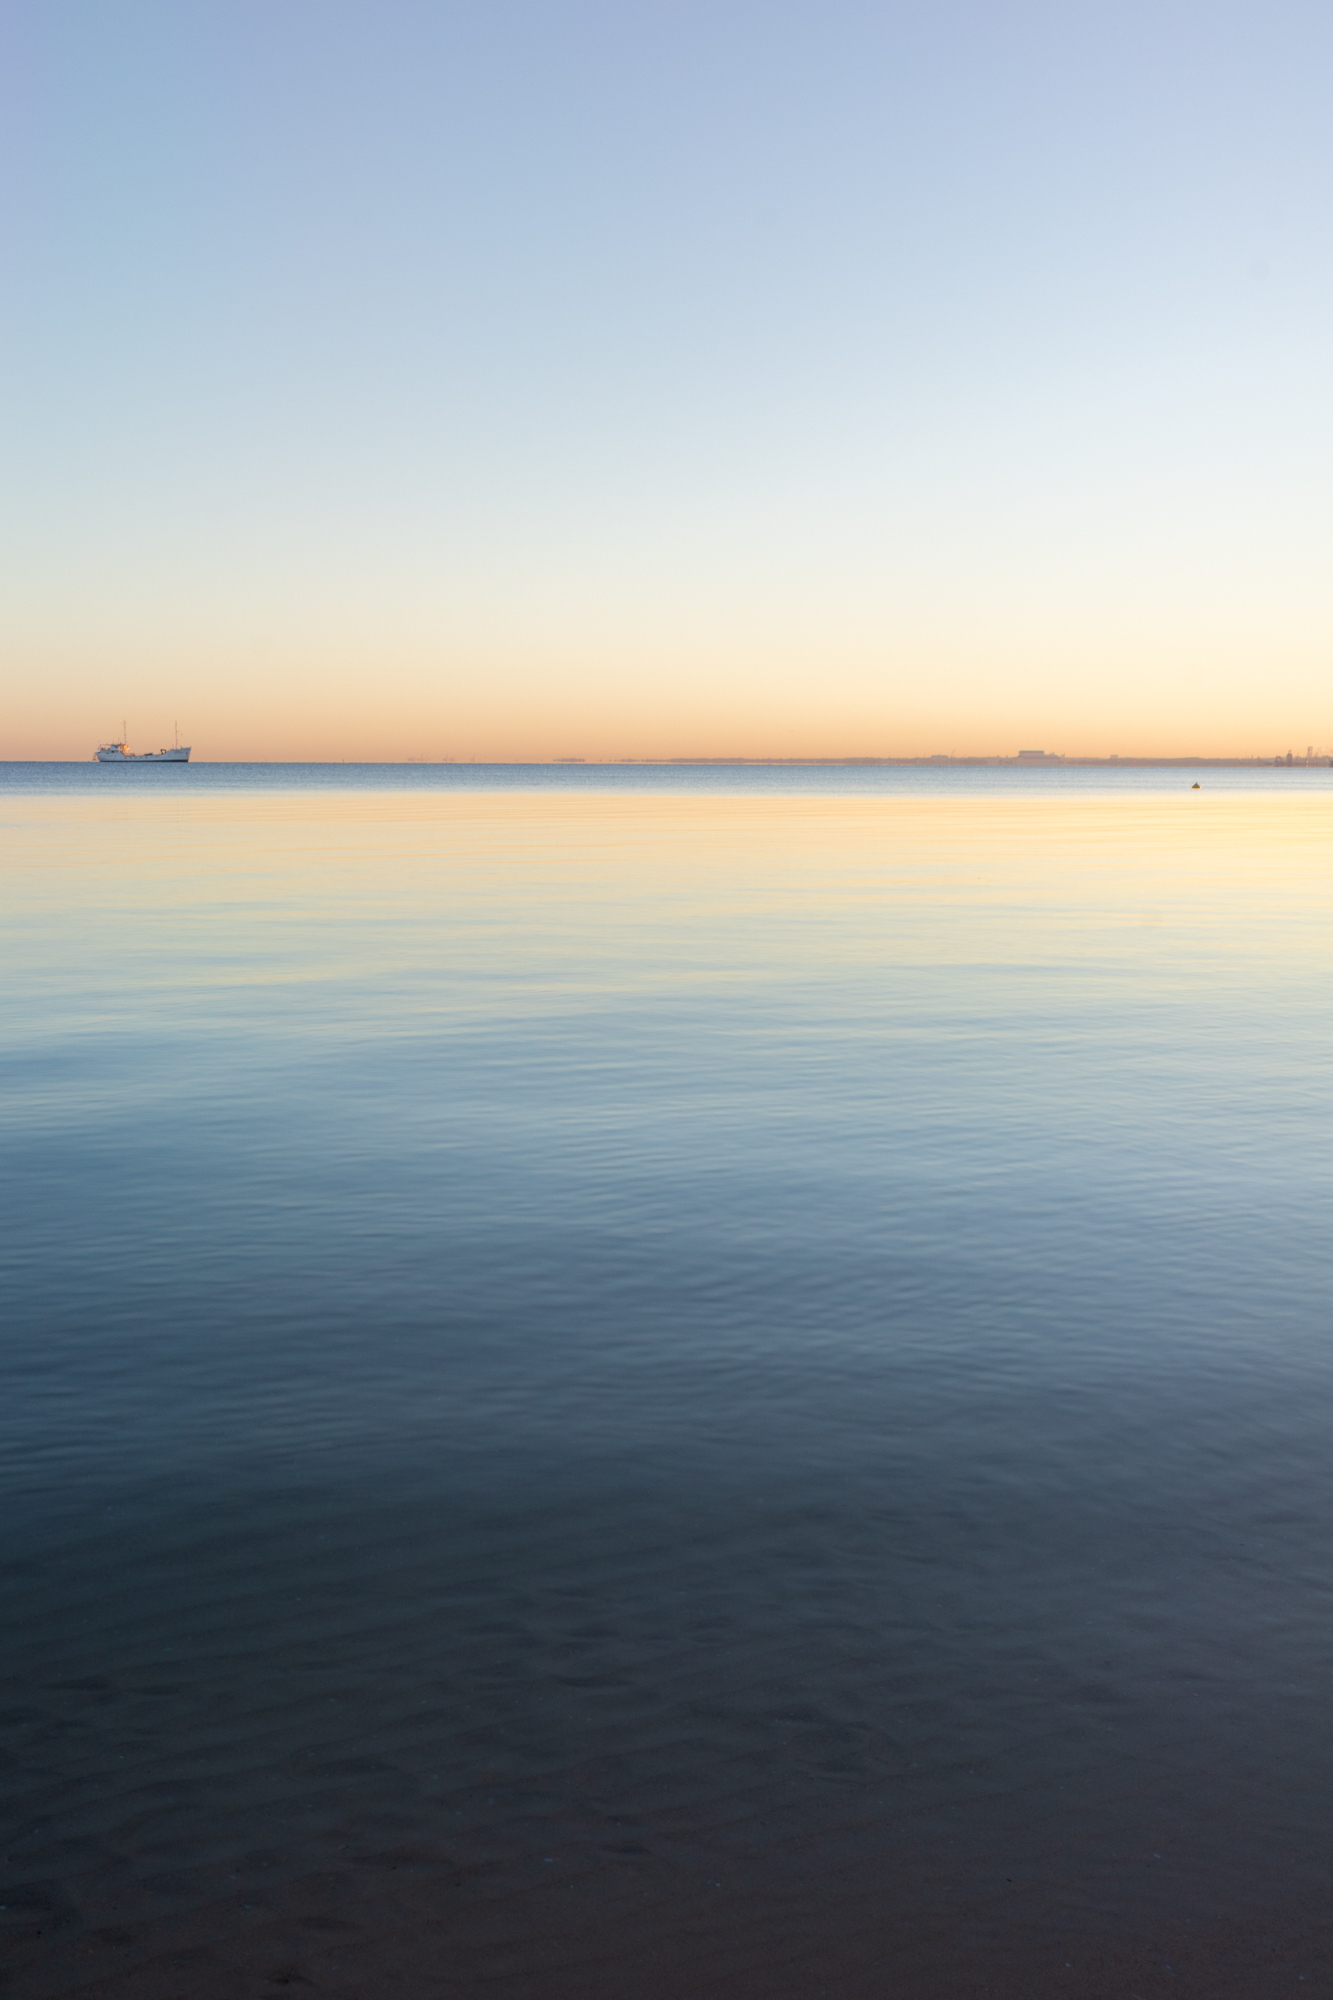 Auto-generated description: A calm sea under a gradient sunrise sky with a distant ship on the horizon.